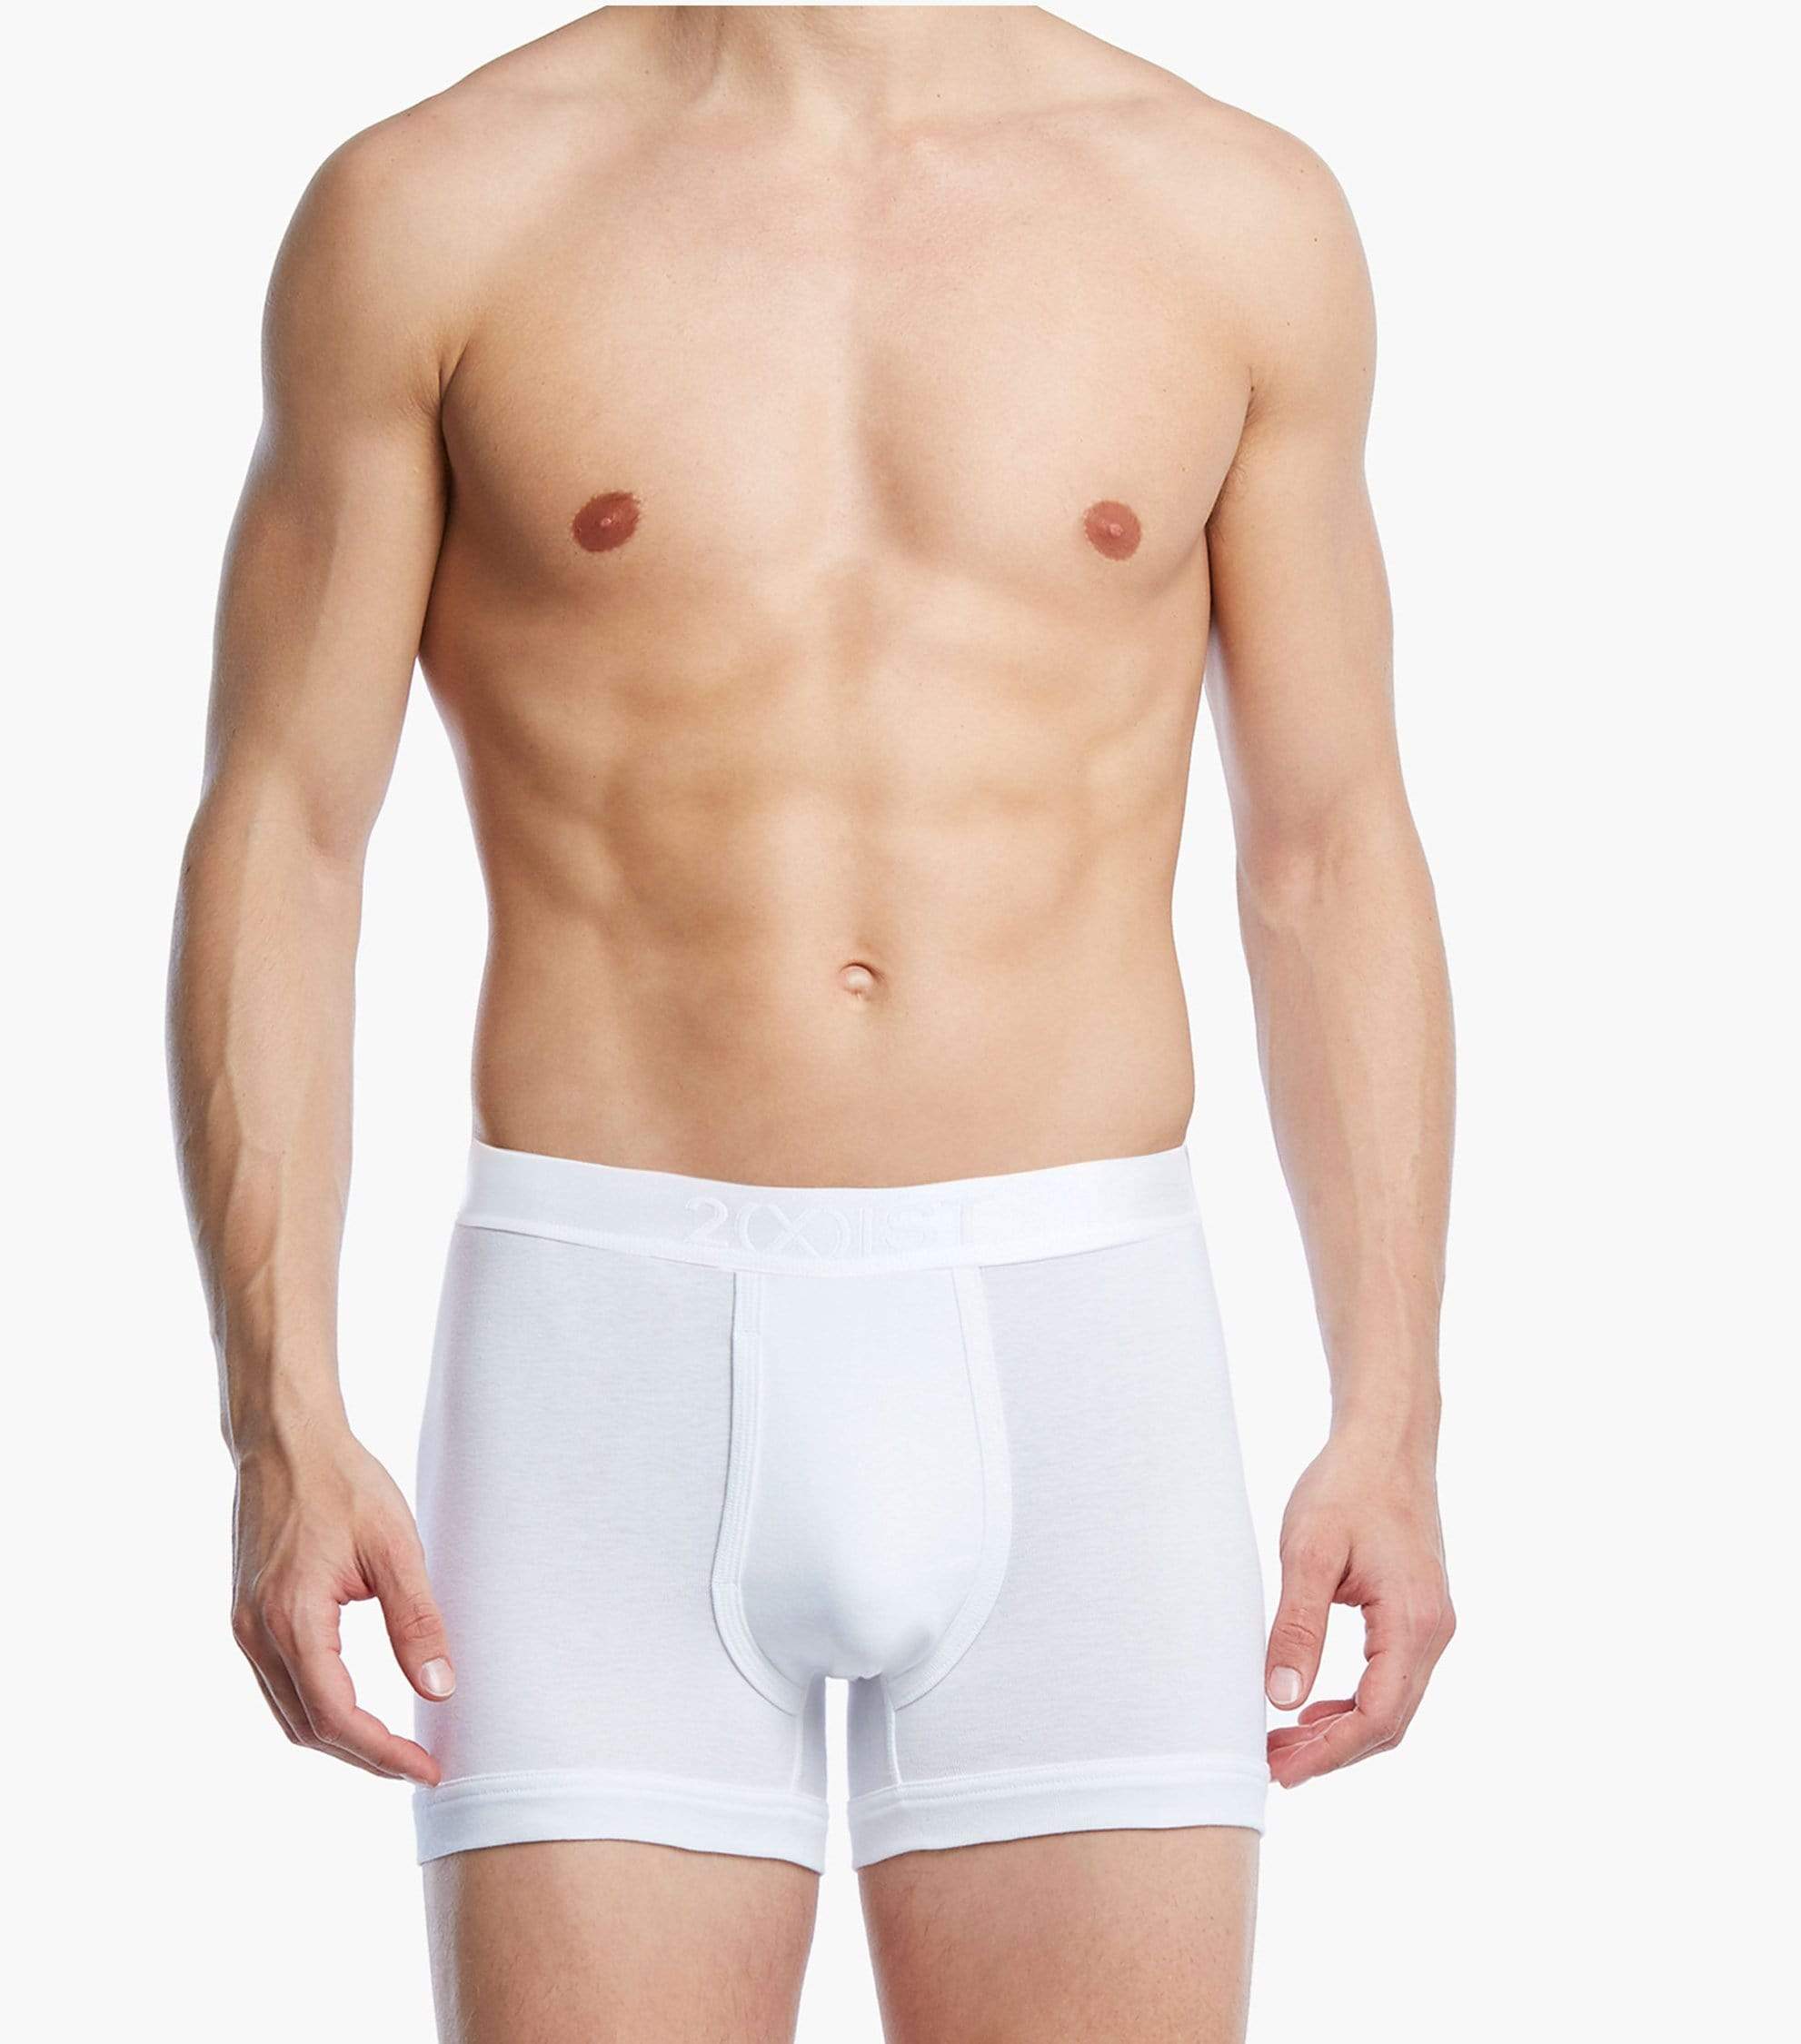  Spanx for Men Cotton Comfort Trunk White XL (42-44